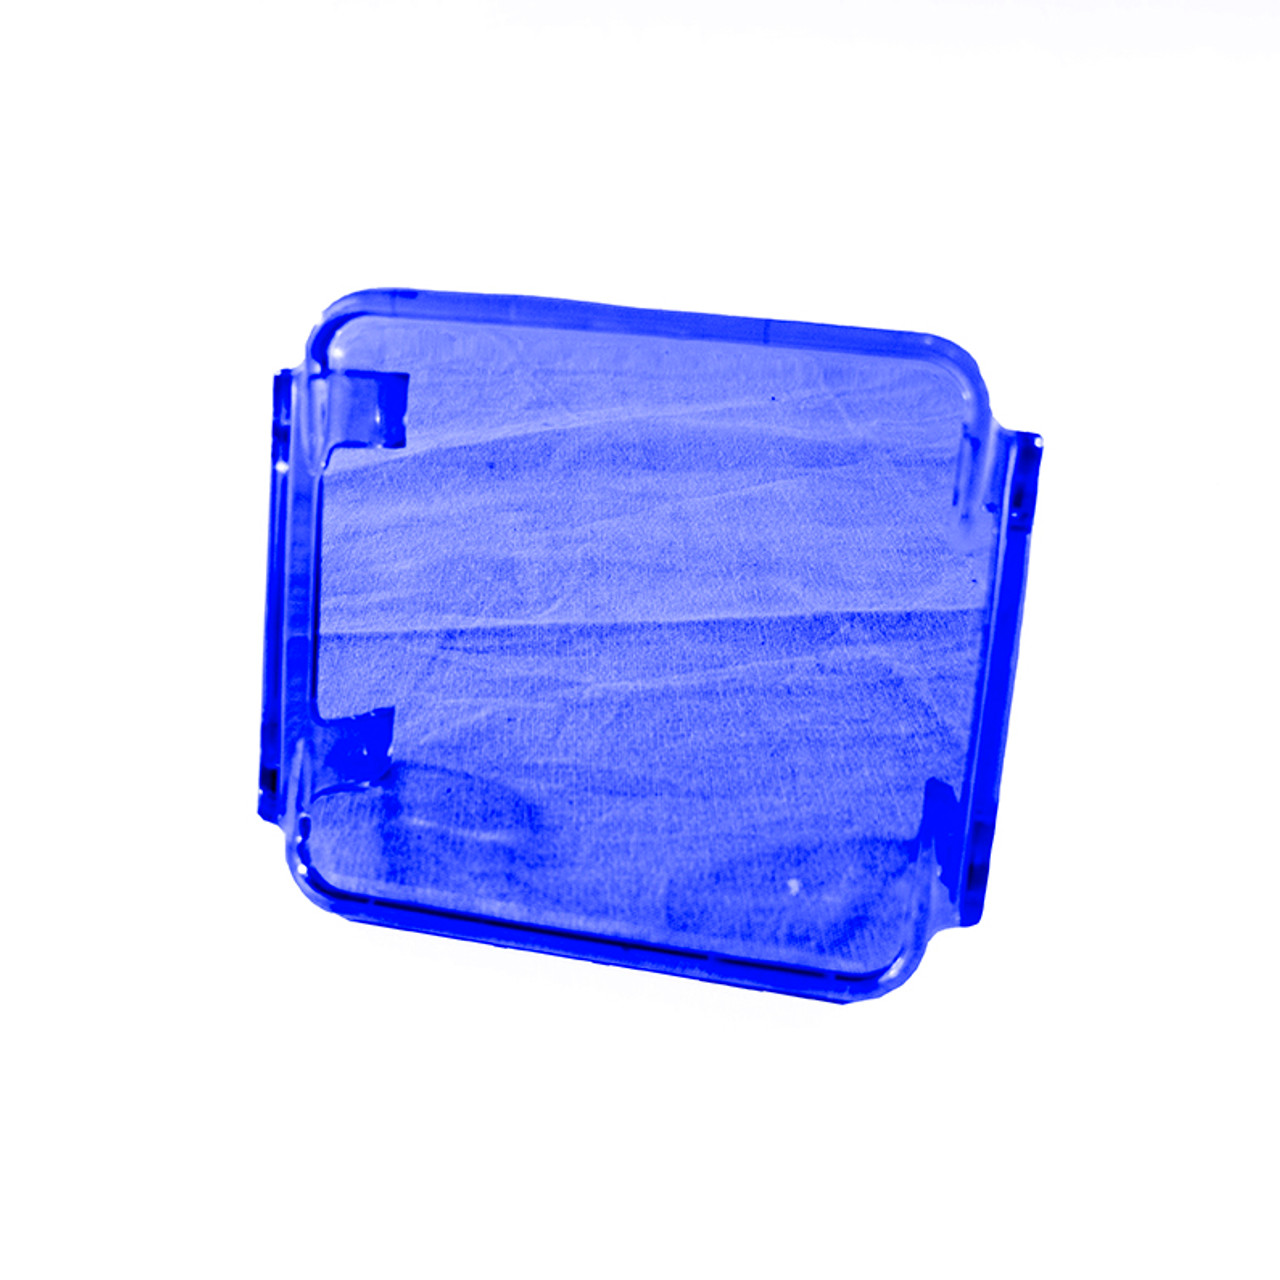 Translucent 3x3 Inch Protective Spotlight Cover Blue Race Sport Lighting